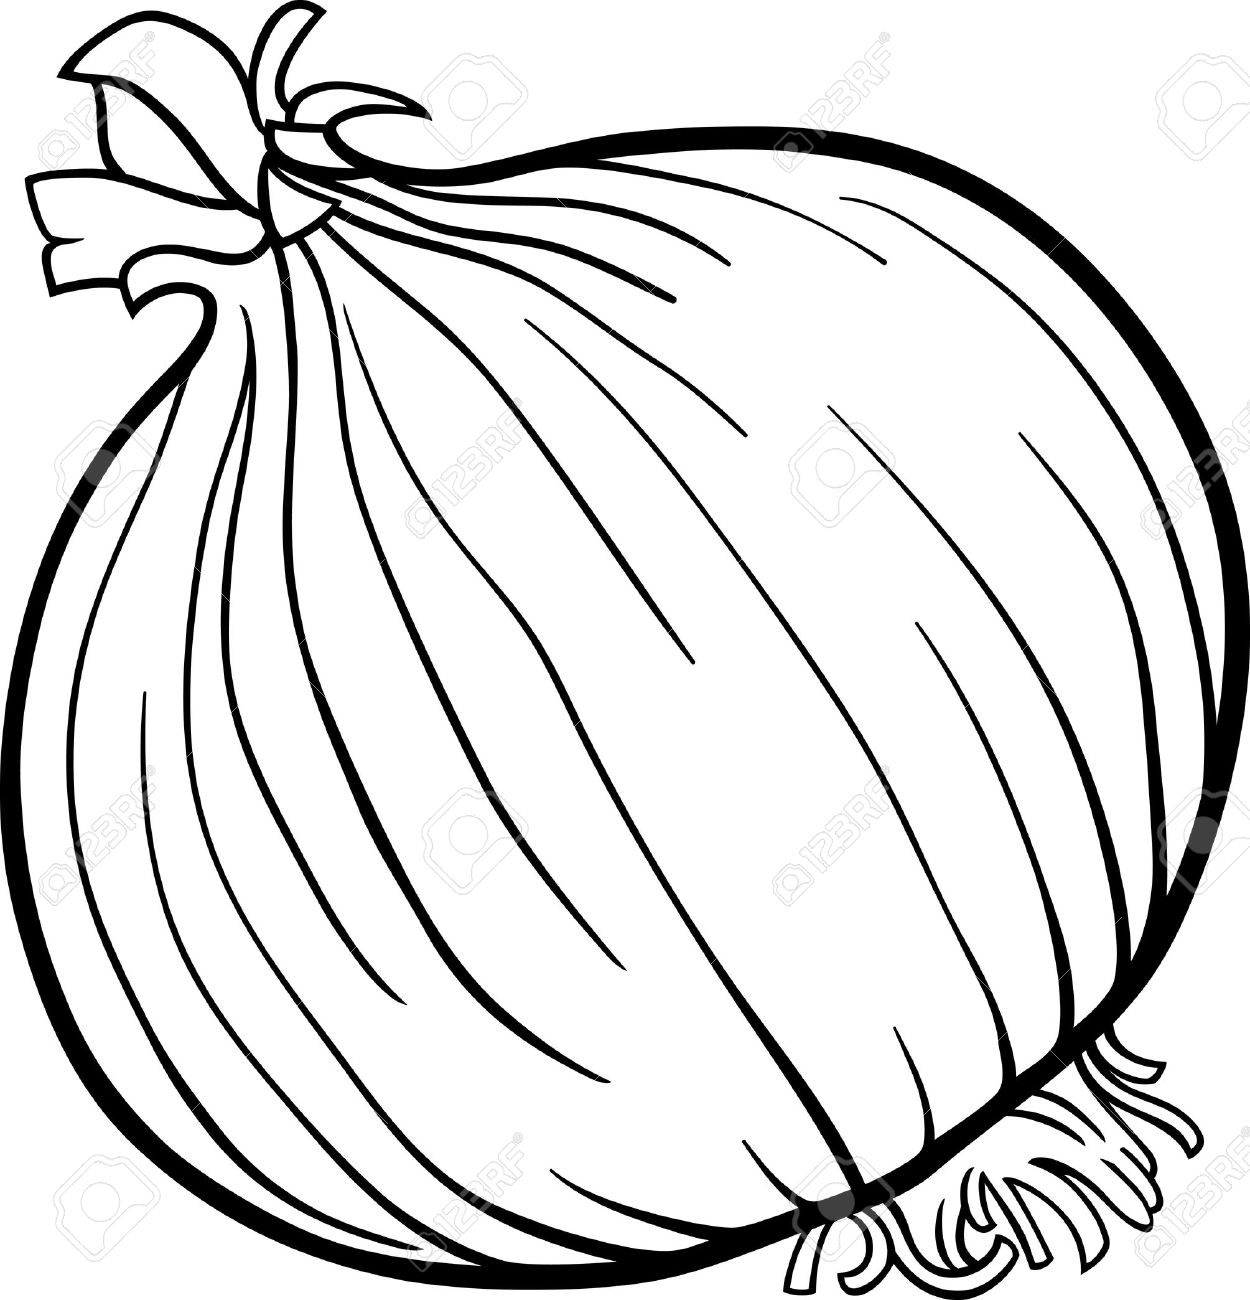 onion clipart outline